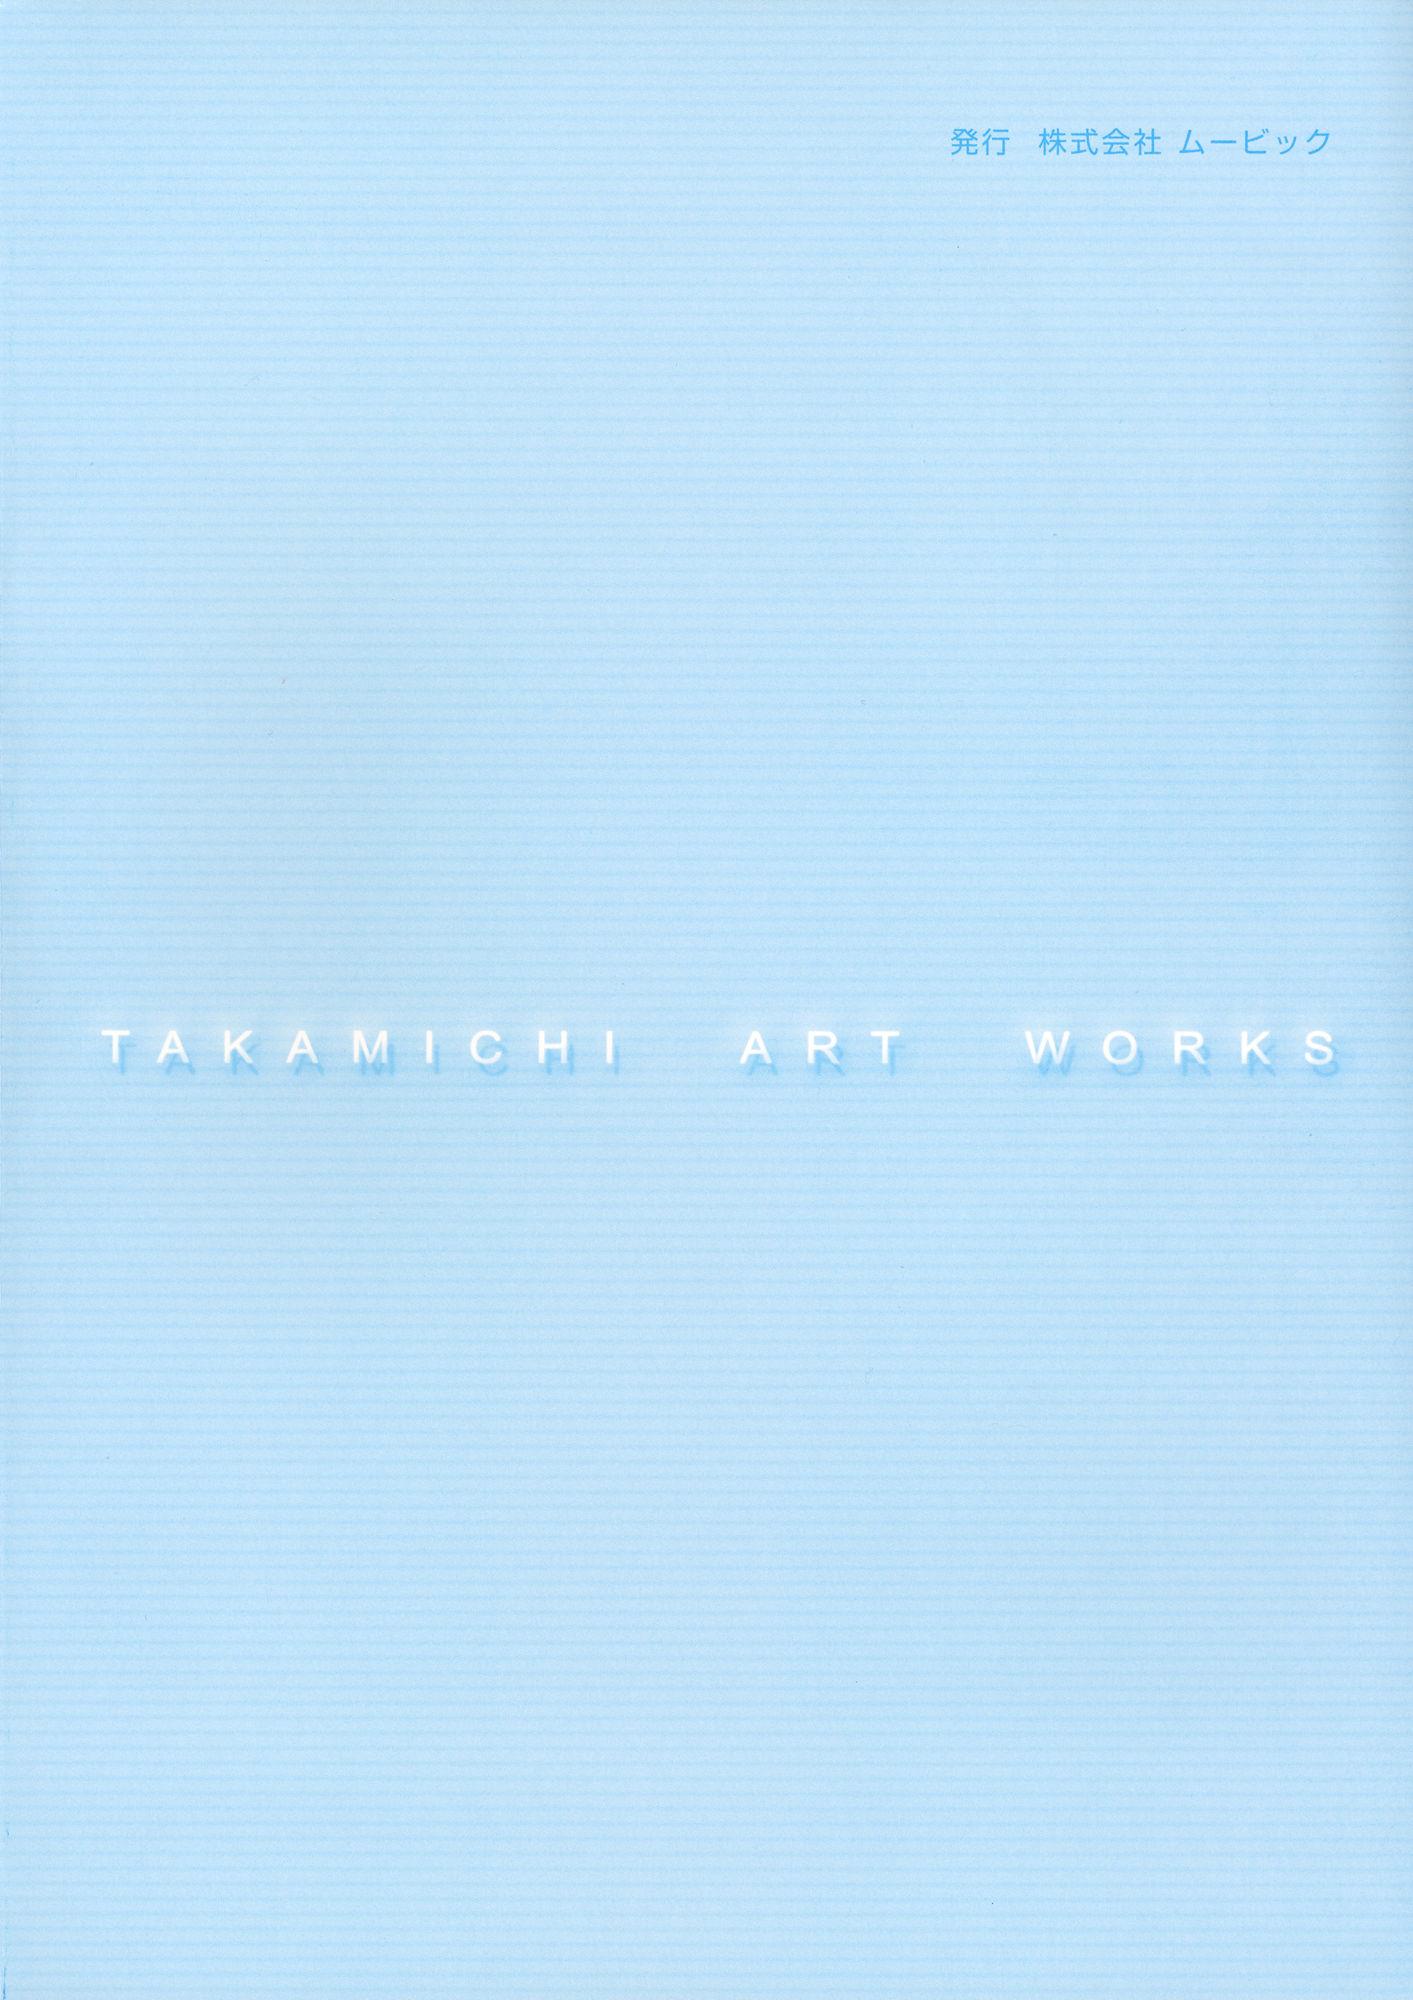 Takamichi Art Works - episode 5 - 2